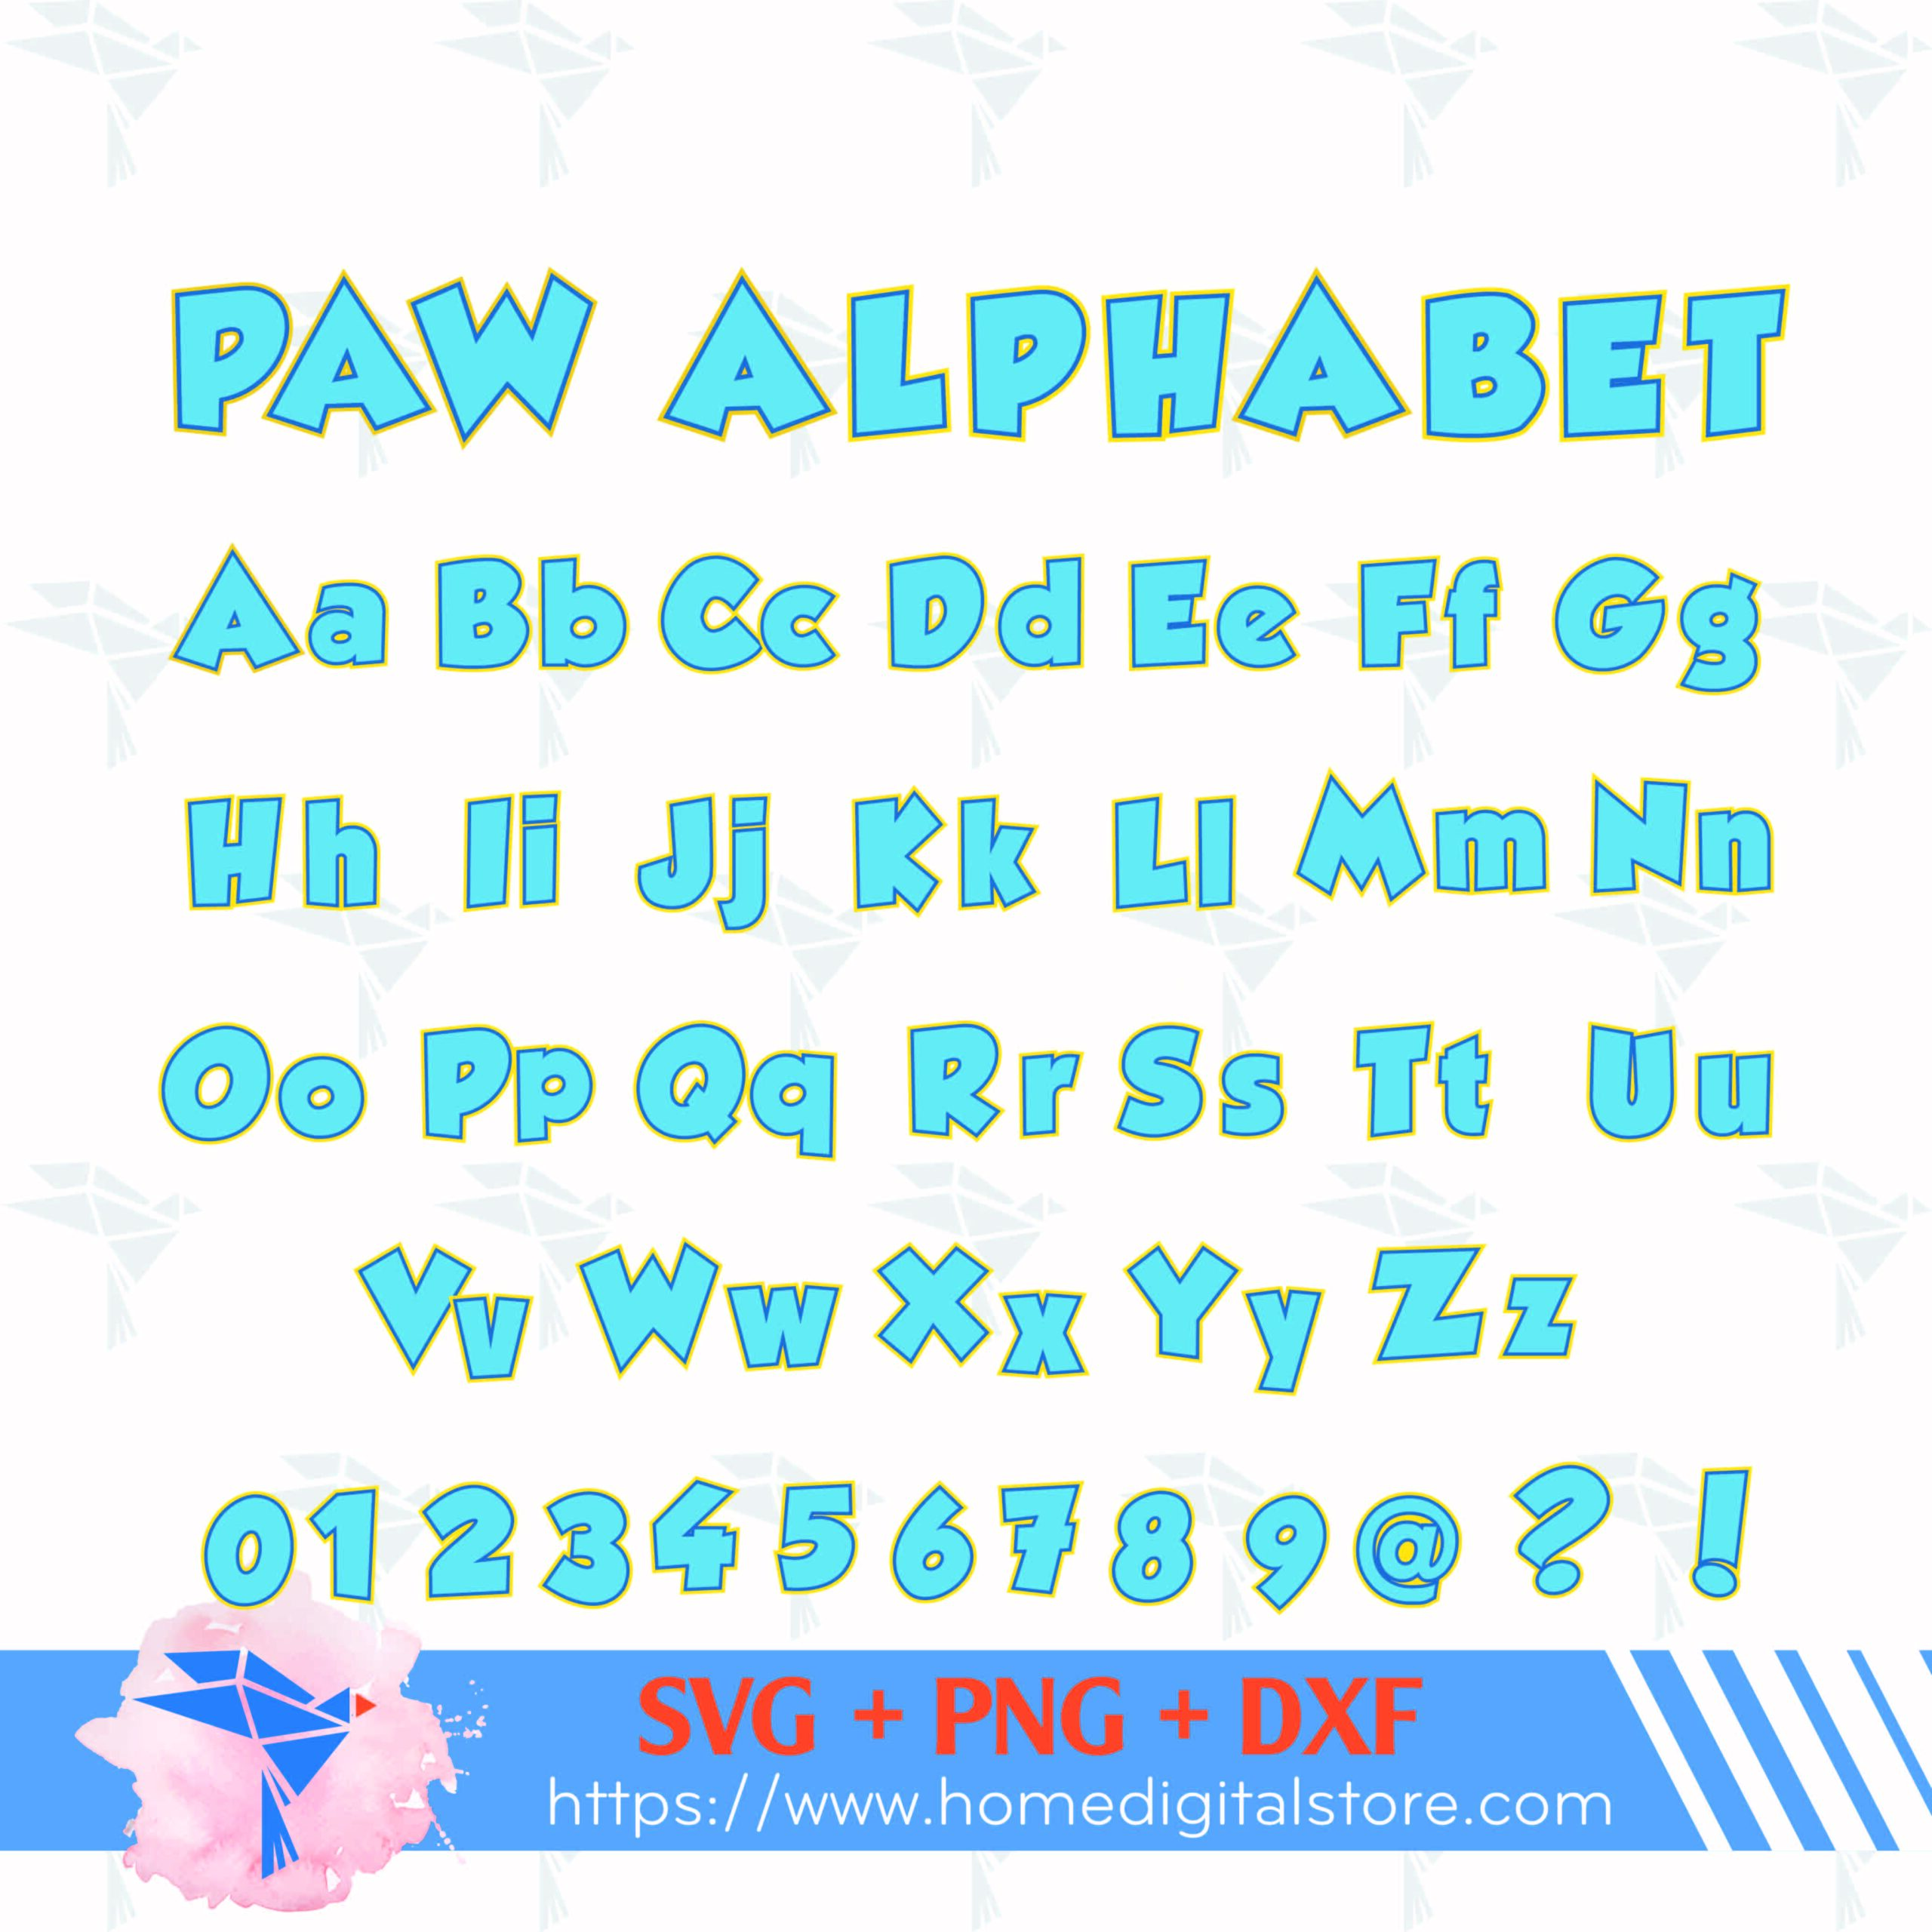 paw-patrol-alphabet-ubicaciondepersonas-cdmx-gob-mx